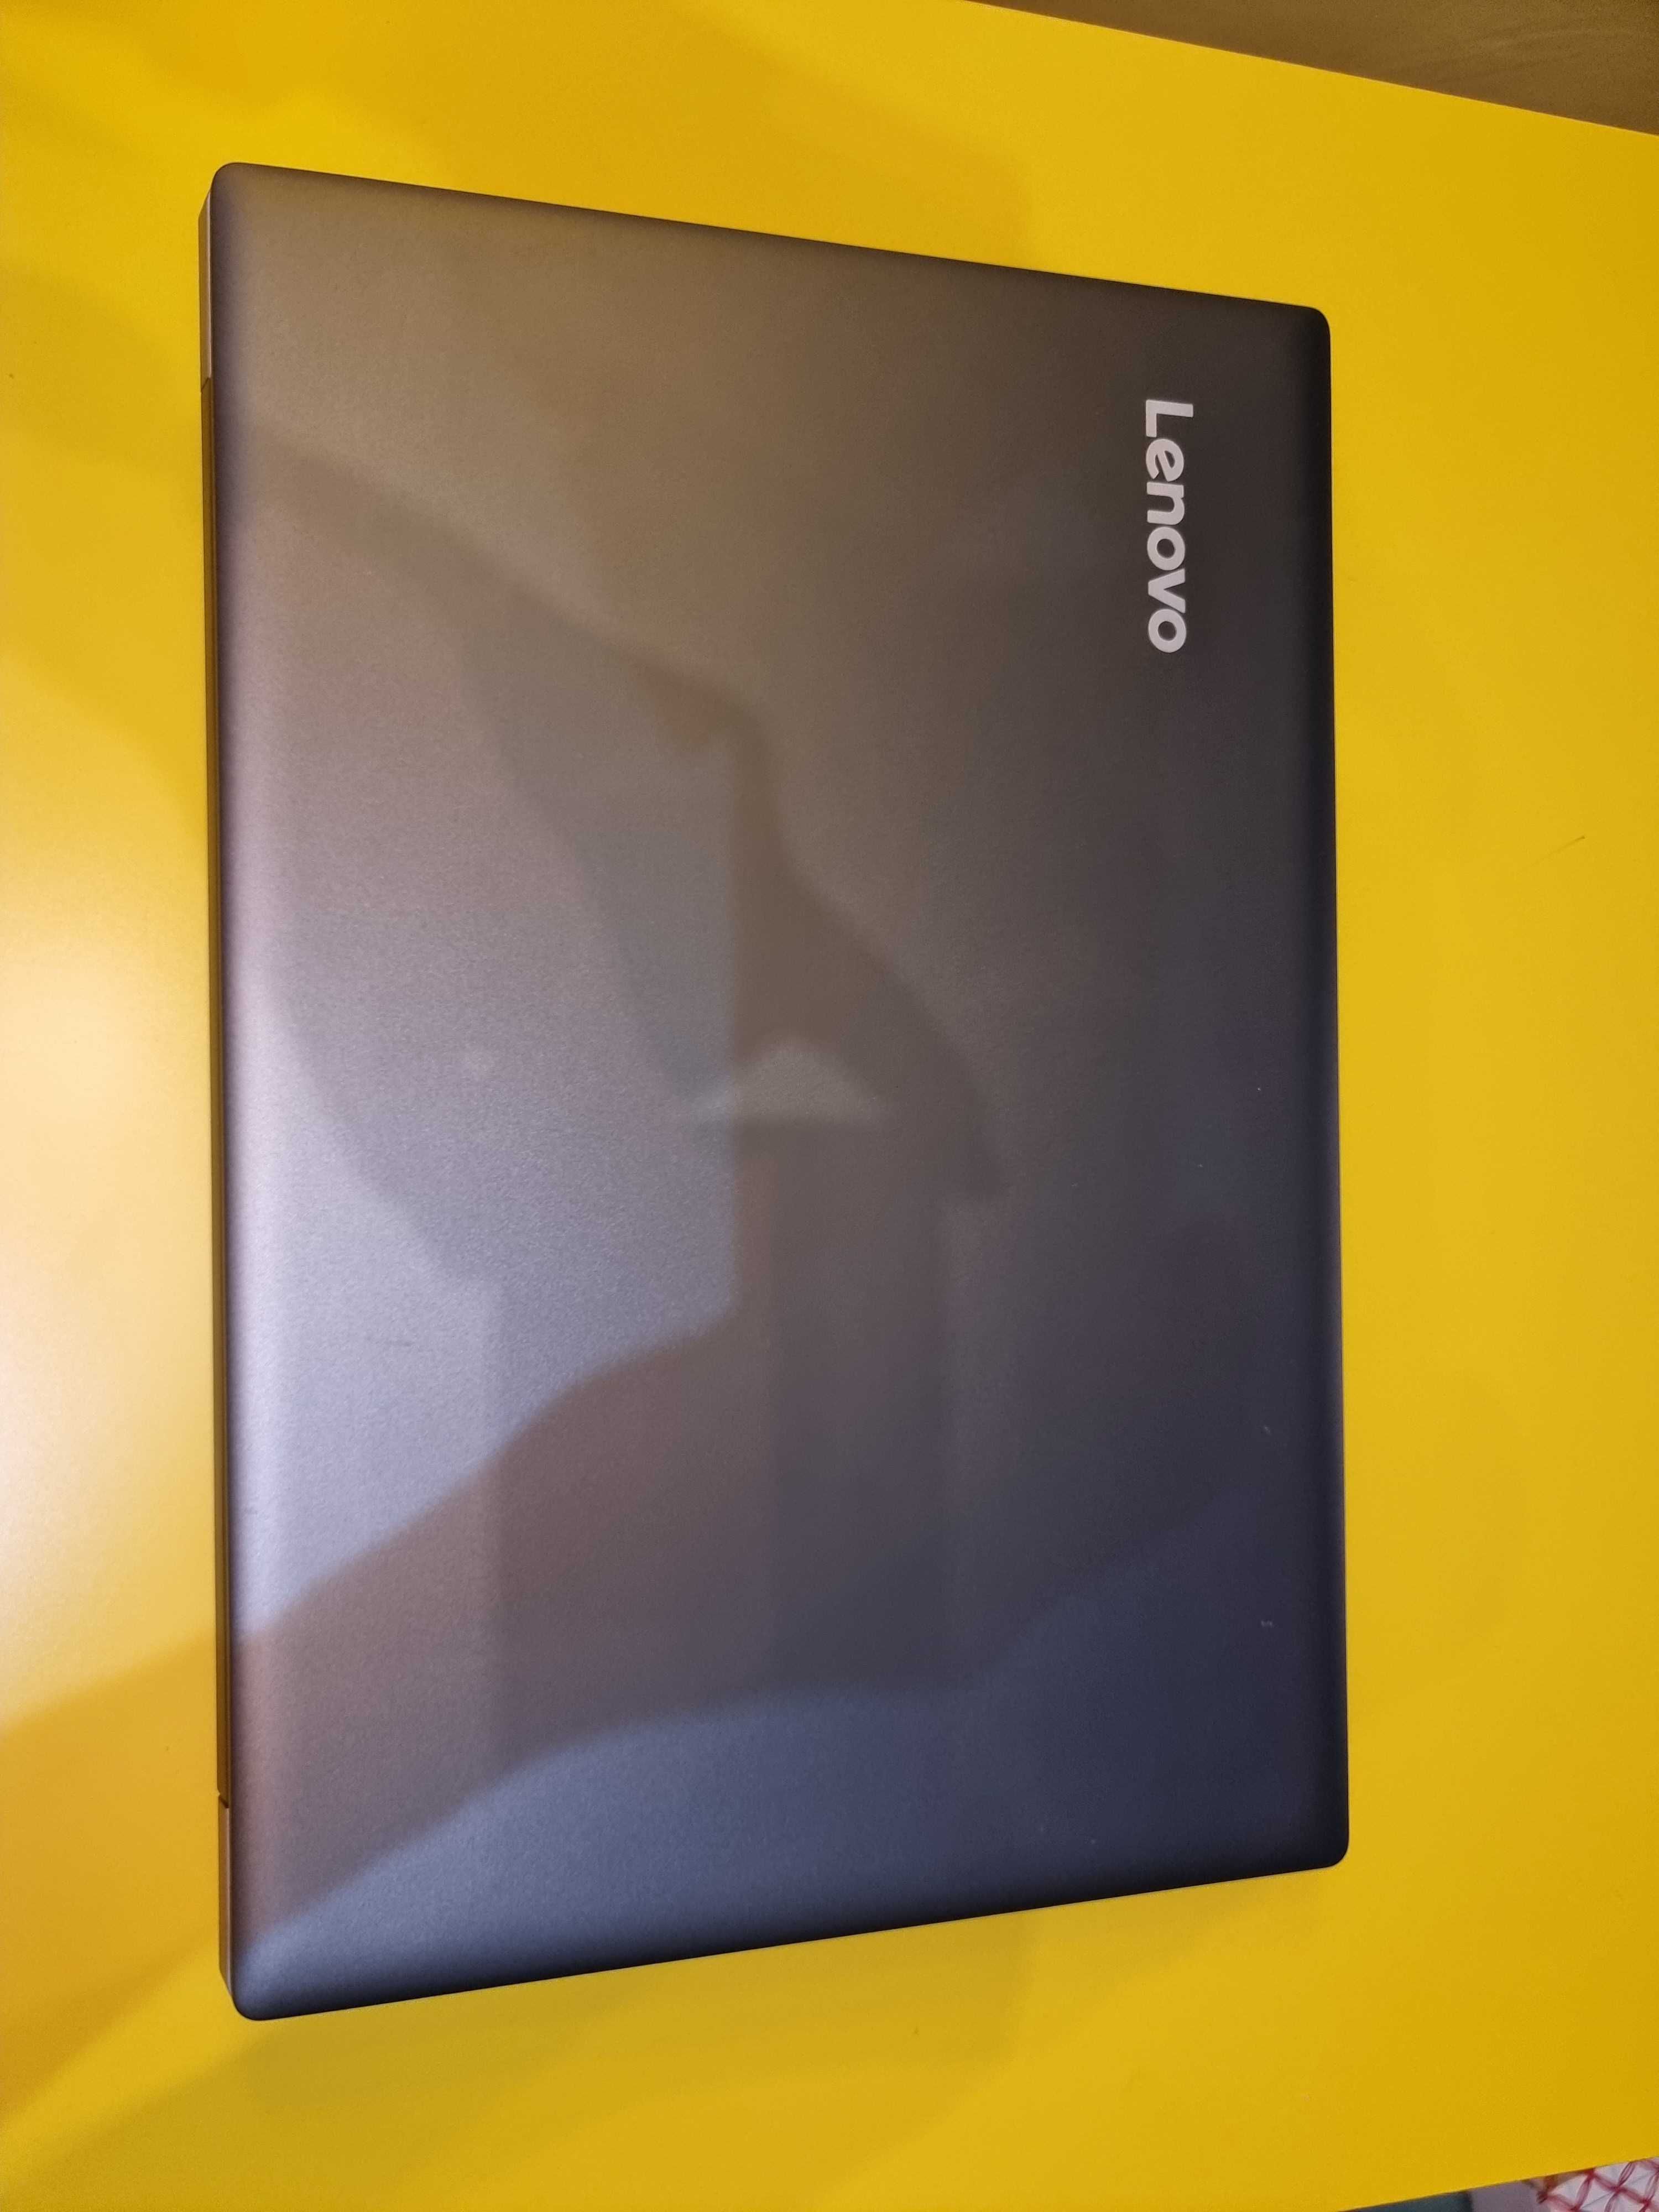 Laptop 15 Notebook Lenovo i7 gen 7, 12GB RAM, 250GB SSD, Geforce 940MX